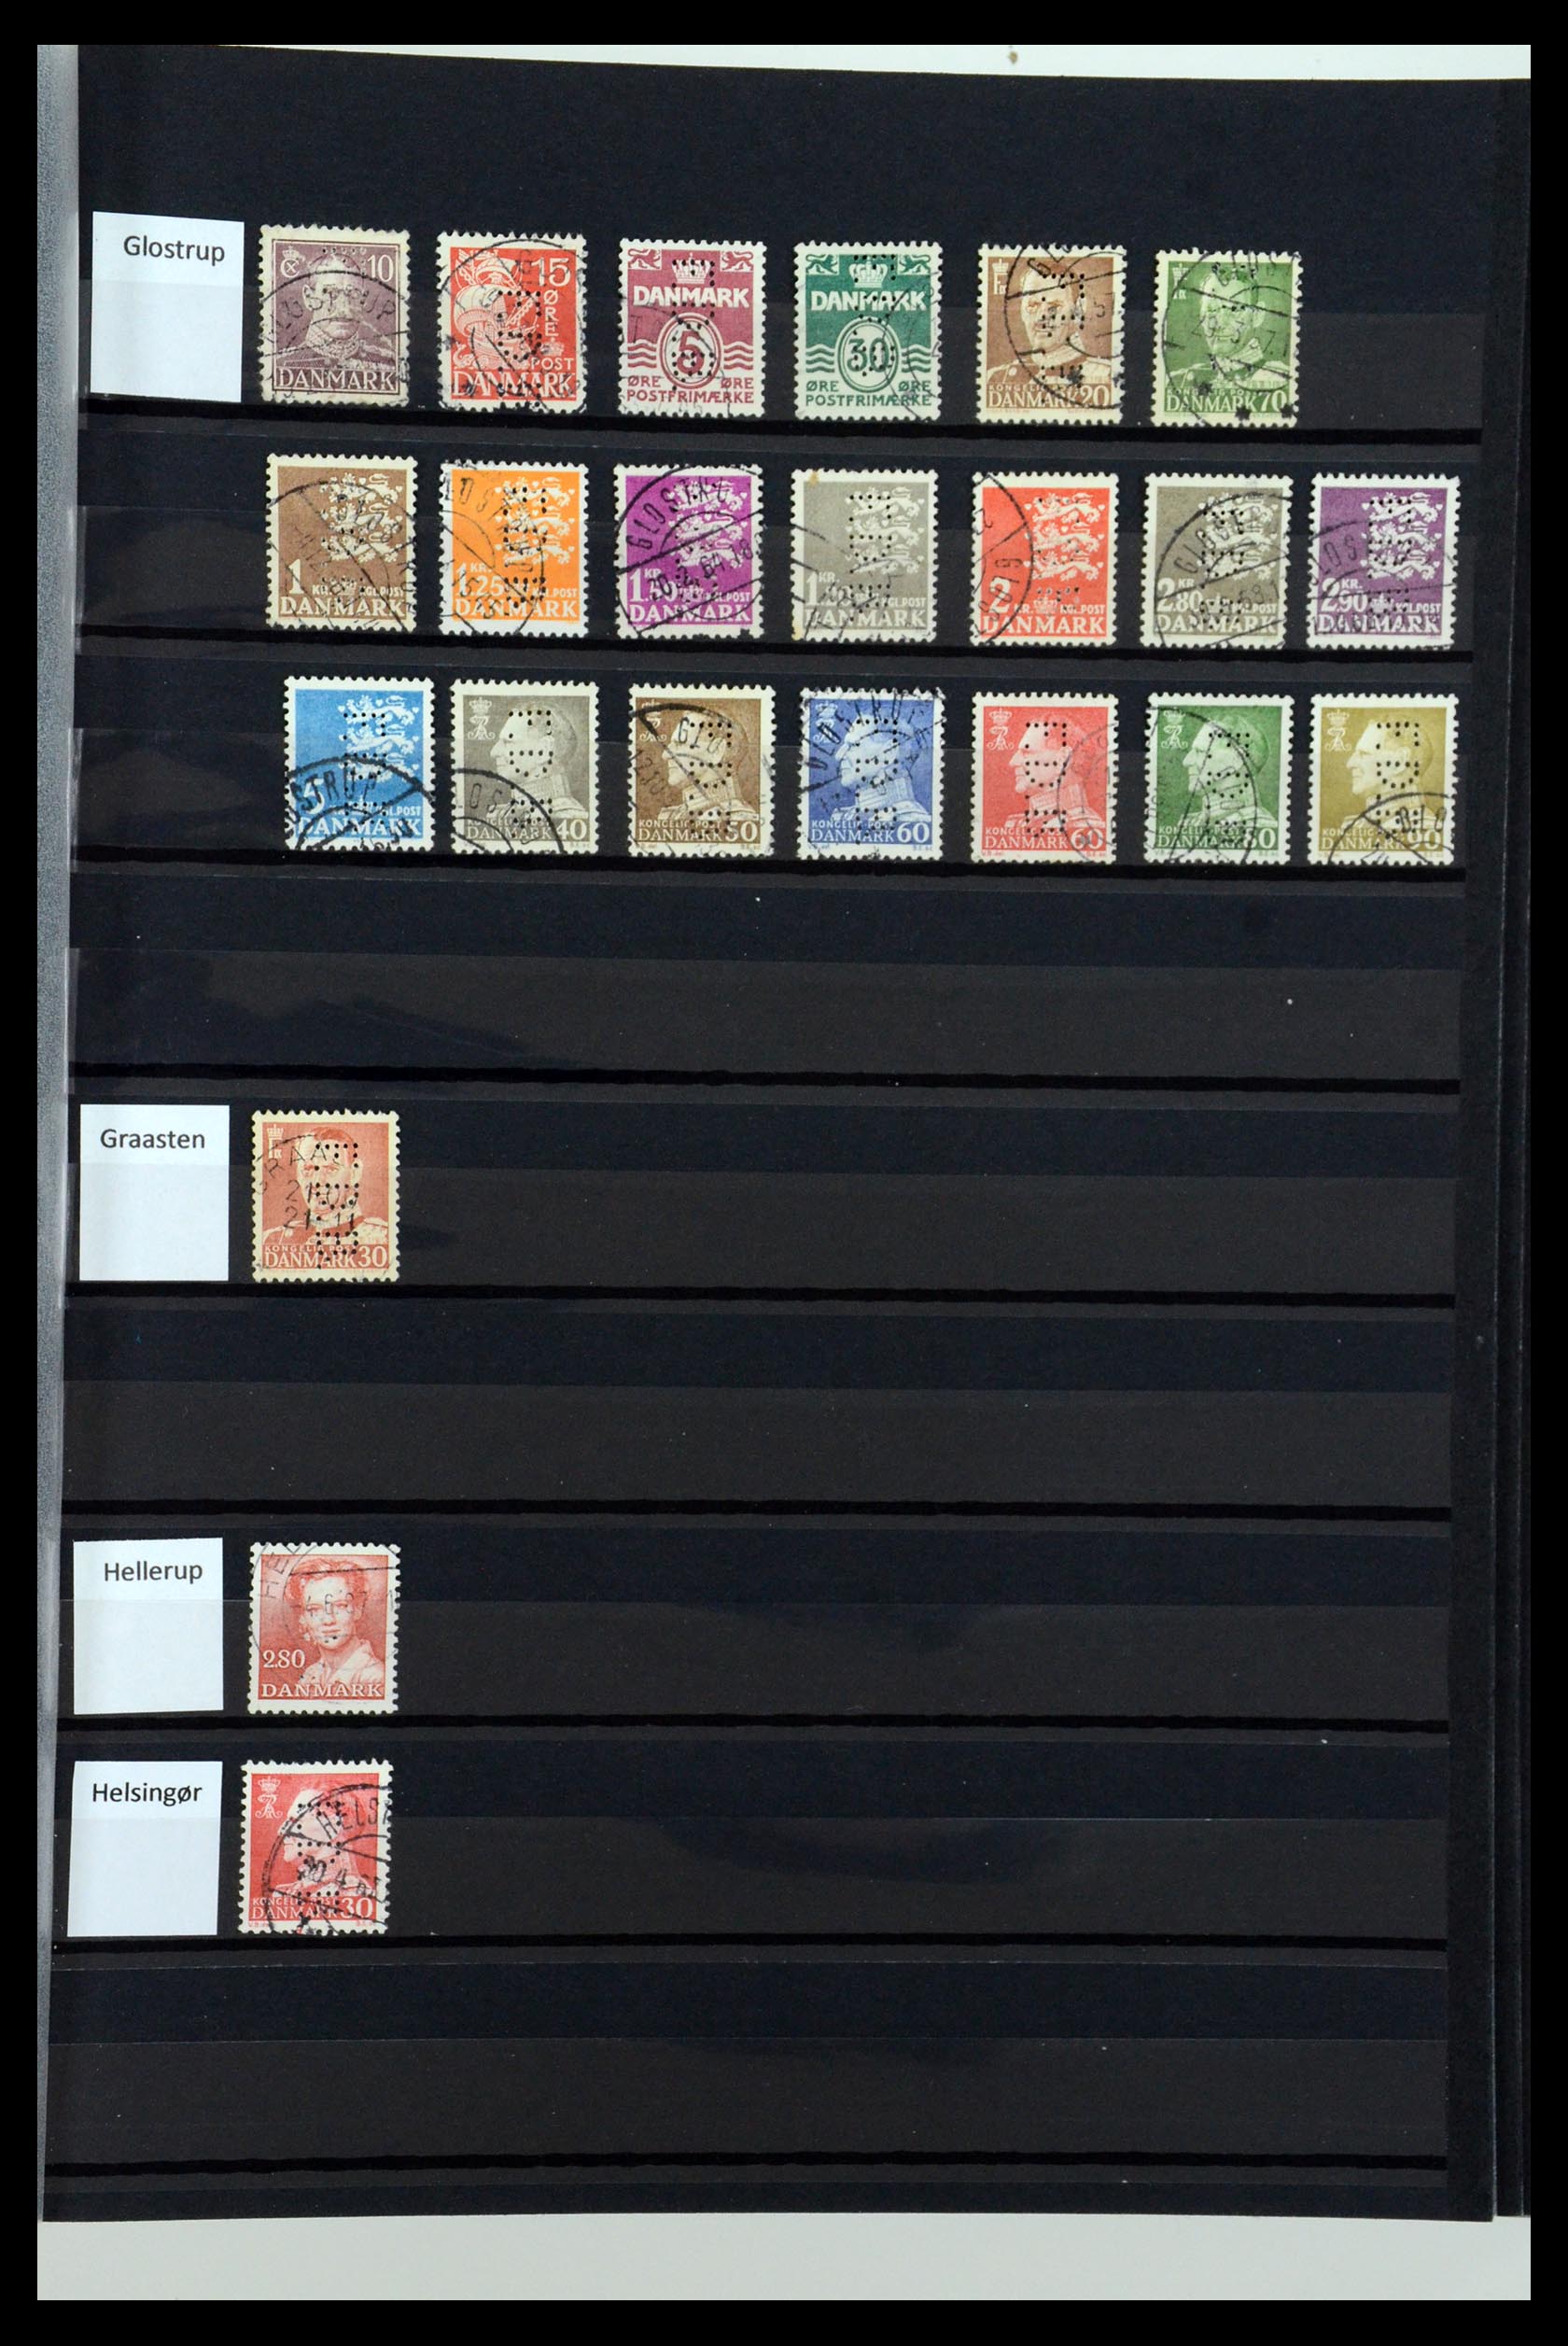 36396 069 - Stamp collection 36396 Denmark perfins.